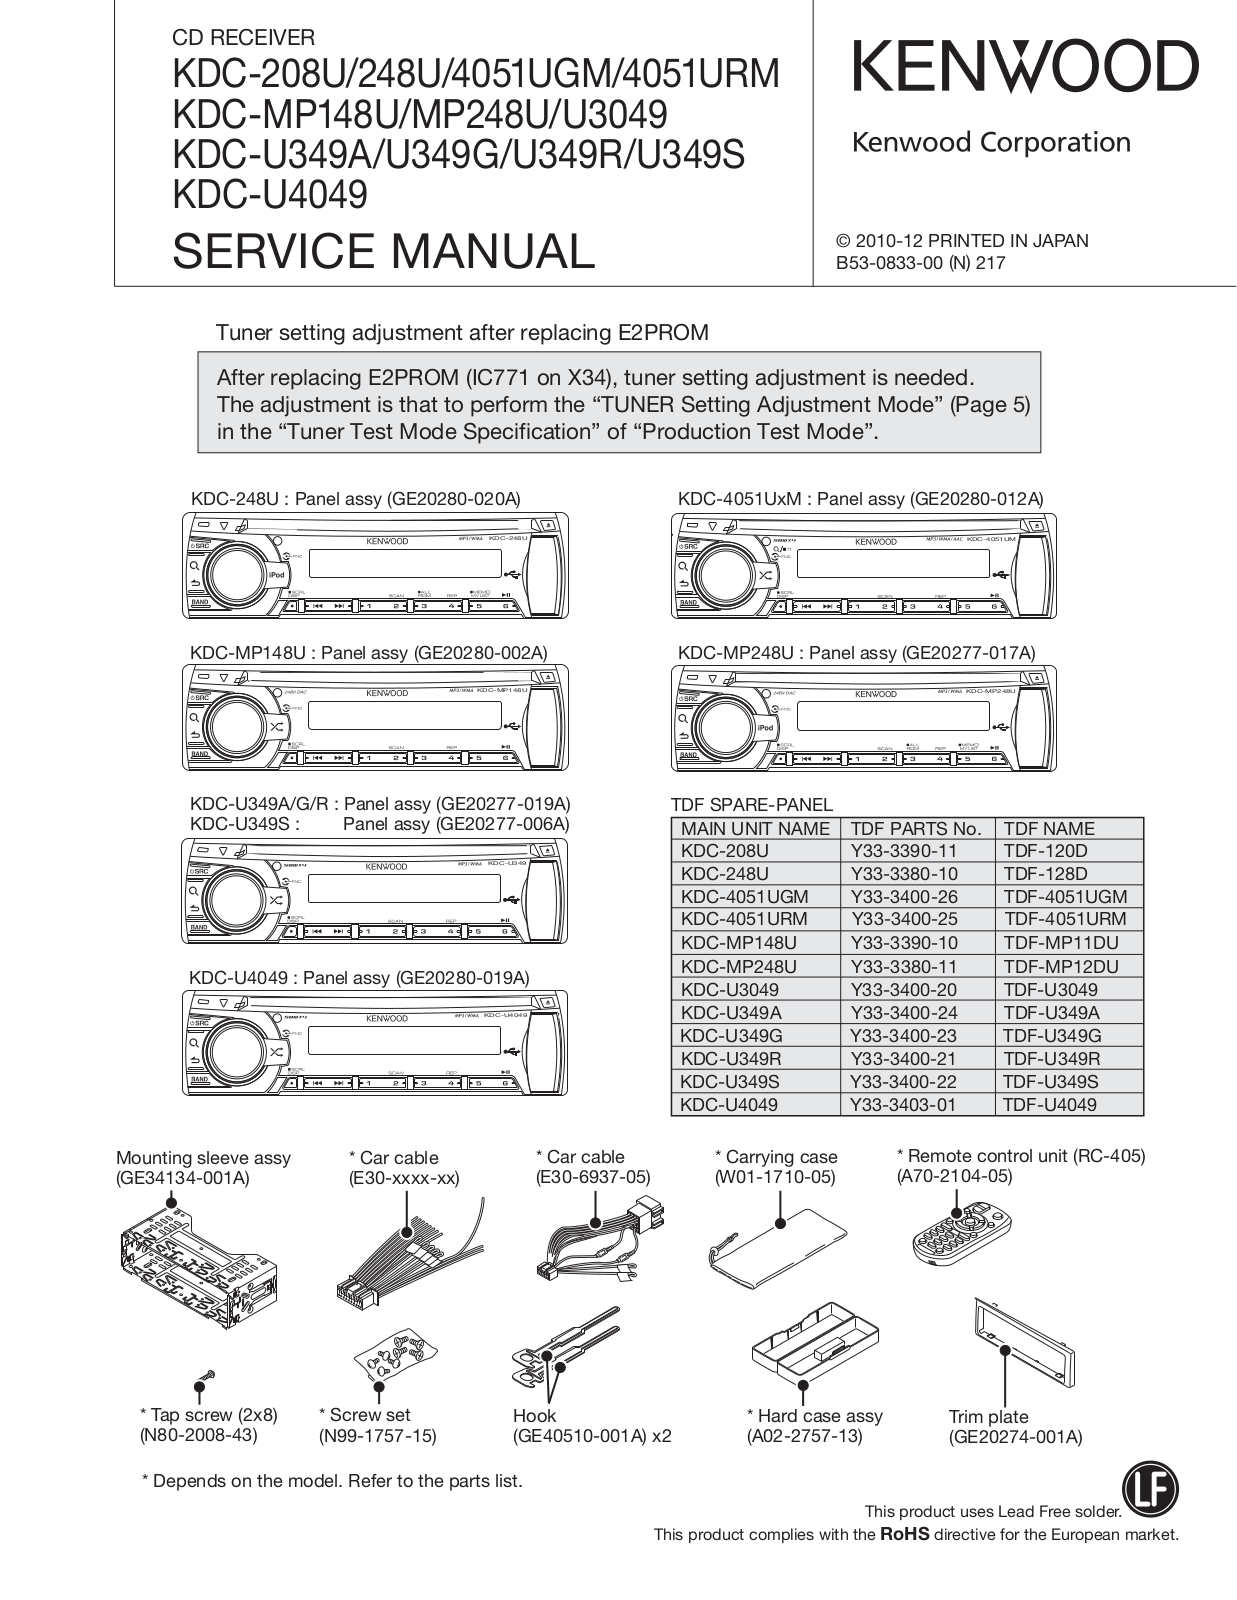 Kenwood KD-CU-4049, KD-CU-349-S, KD-CU-349-R, KD-CU-349-G, KD-CU-349-A Service Manual